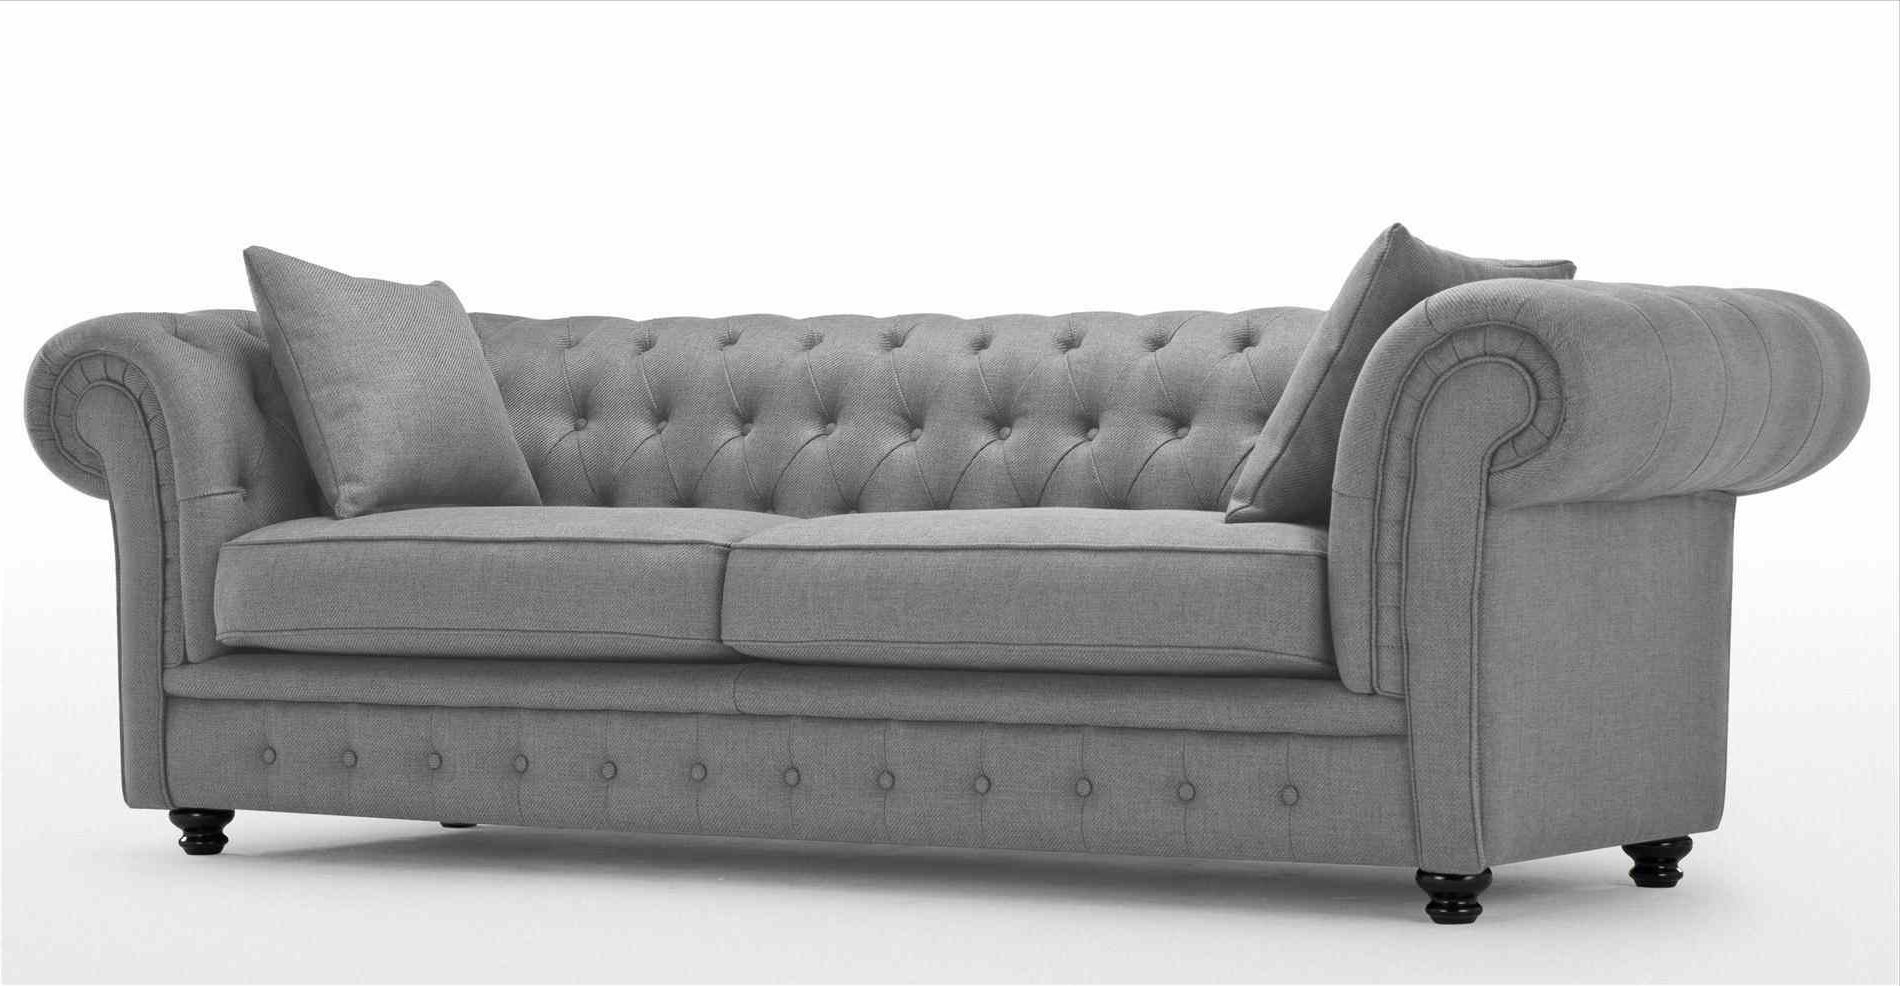 Widely Used Stratford Sofas With Sofa : Sofa White Premium Leather Kardiel Stratford Classic Velvet (View 16 of 20)